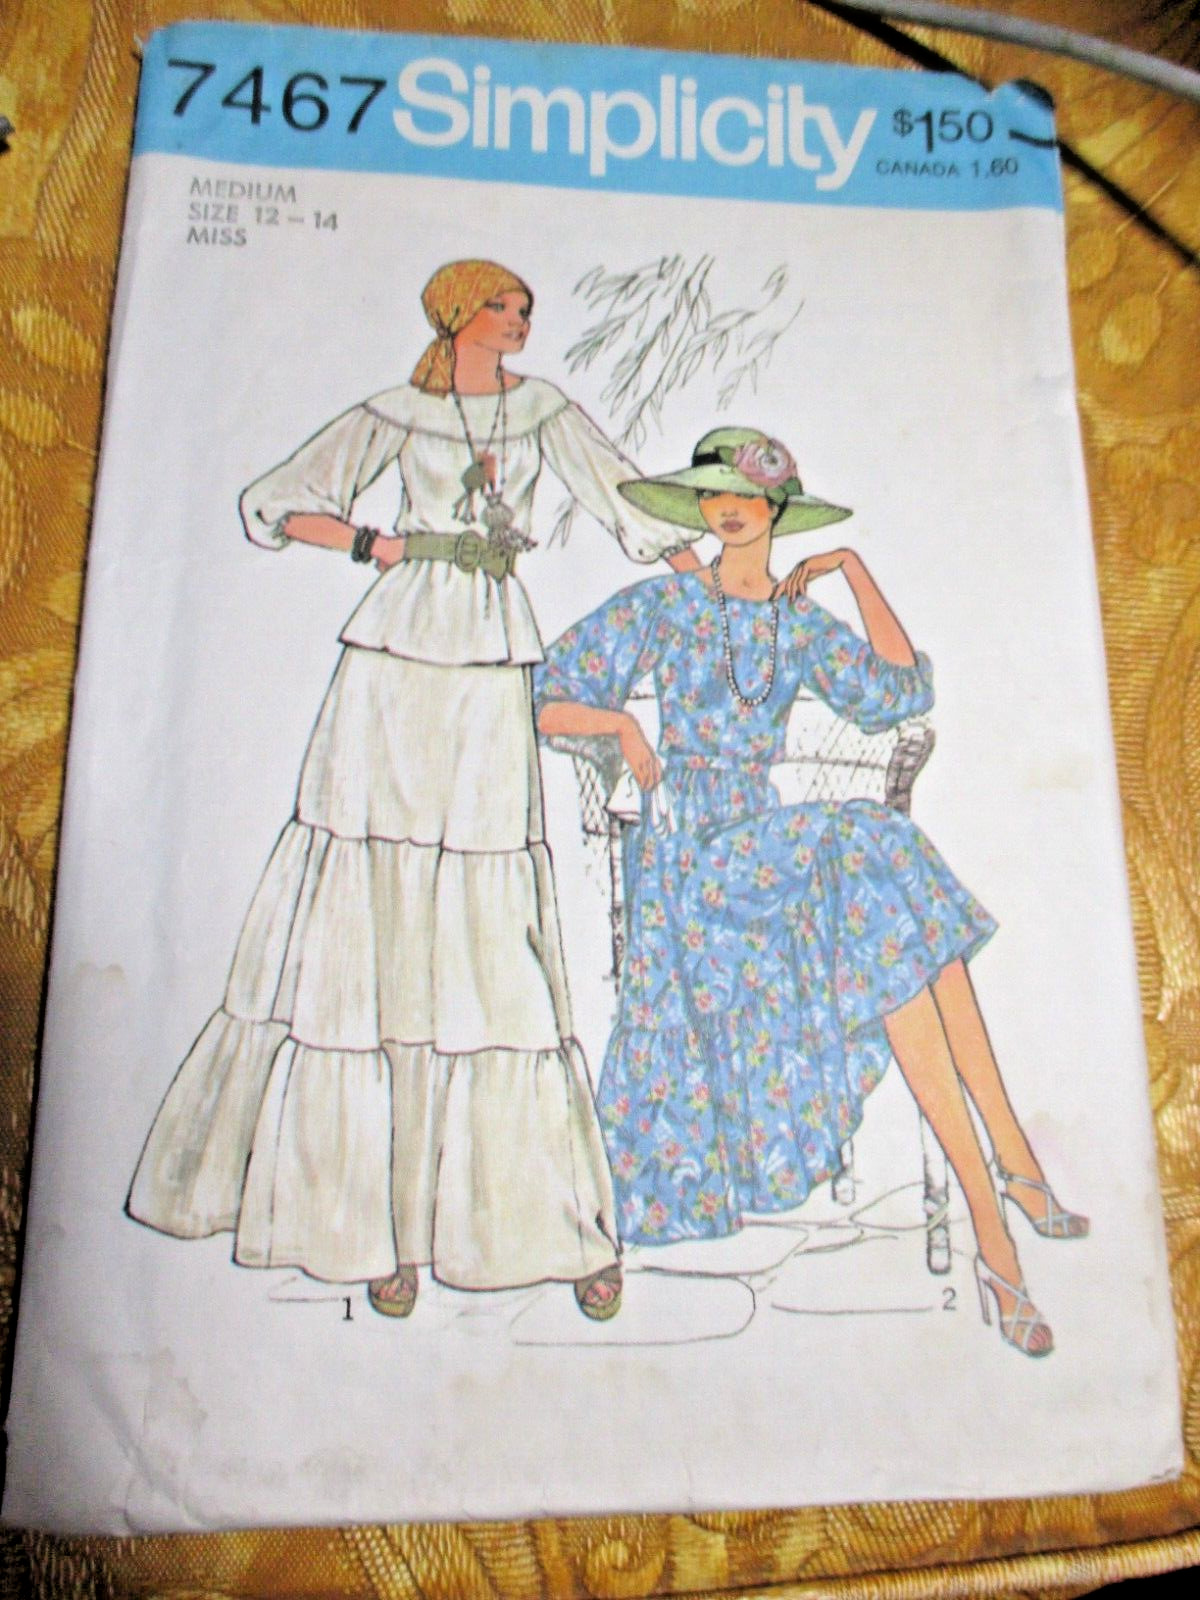 Vintage 1976 Simplicity 7467 Pattern Miss Miss Medium 12-14 Dress